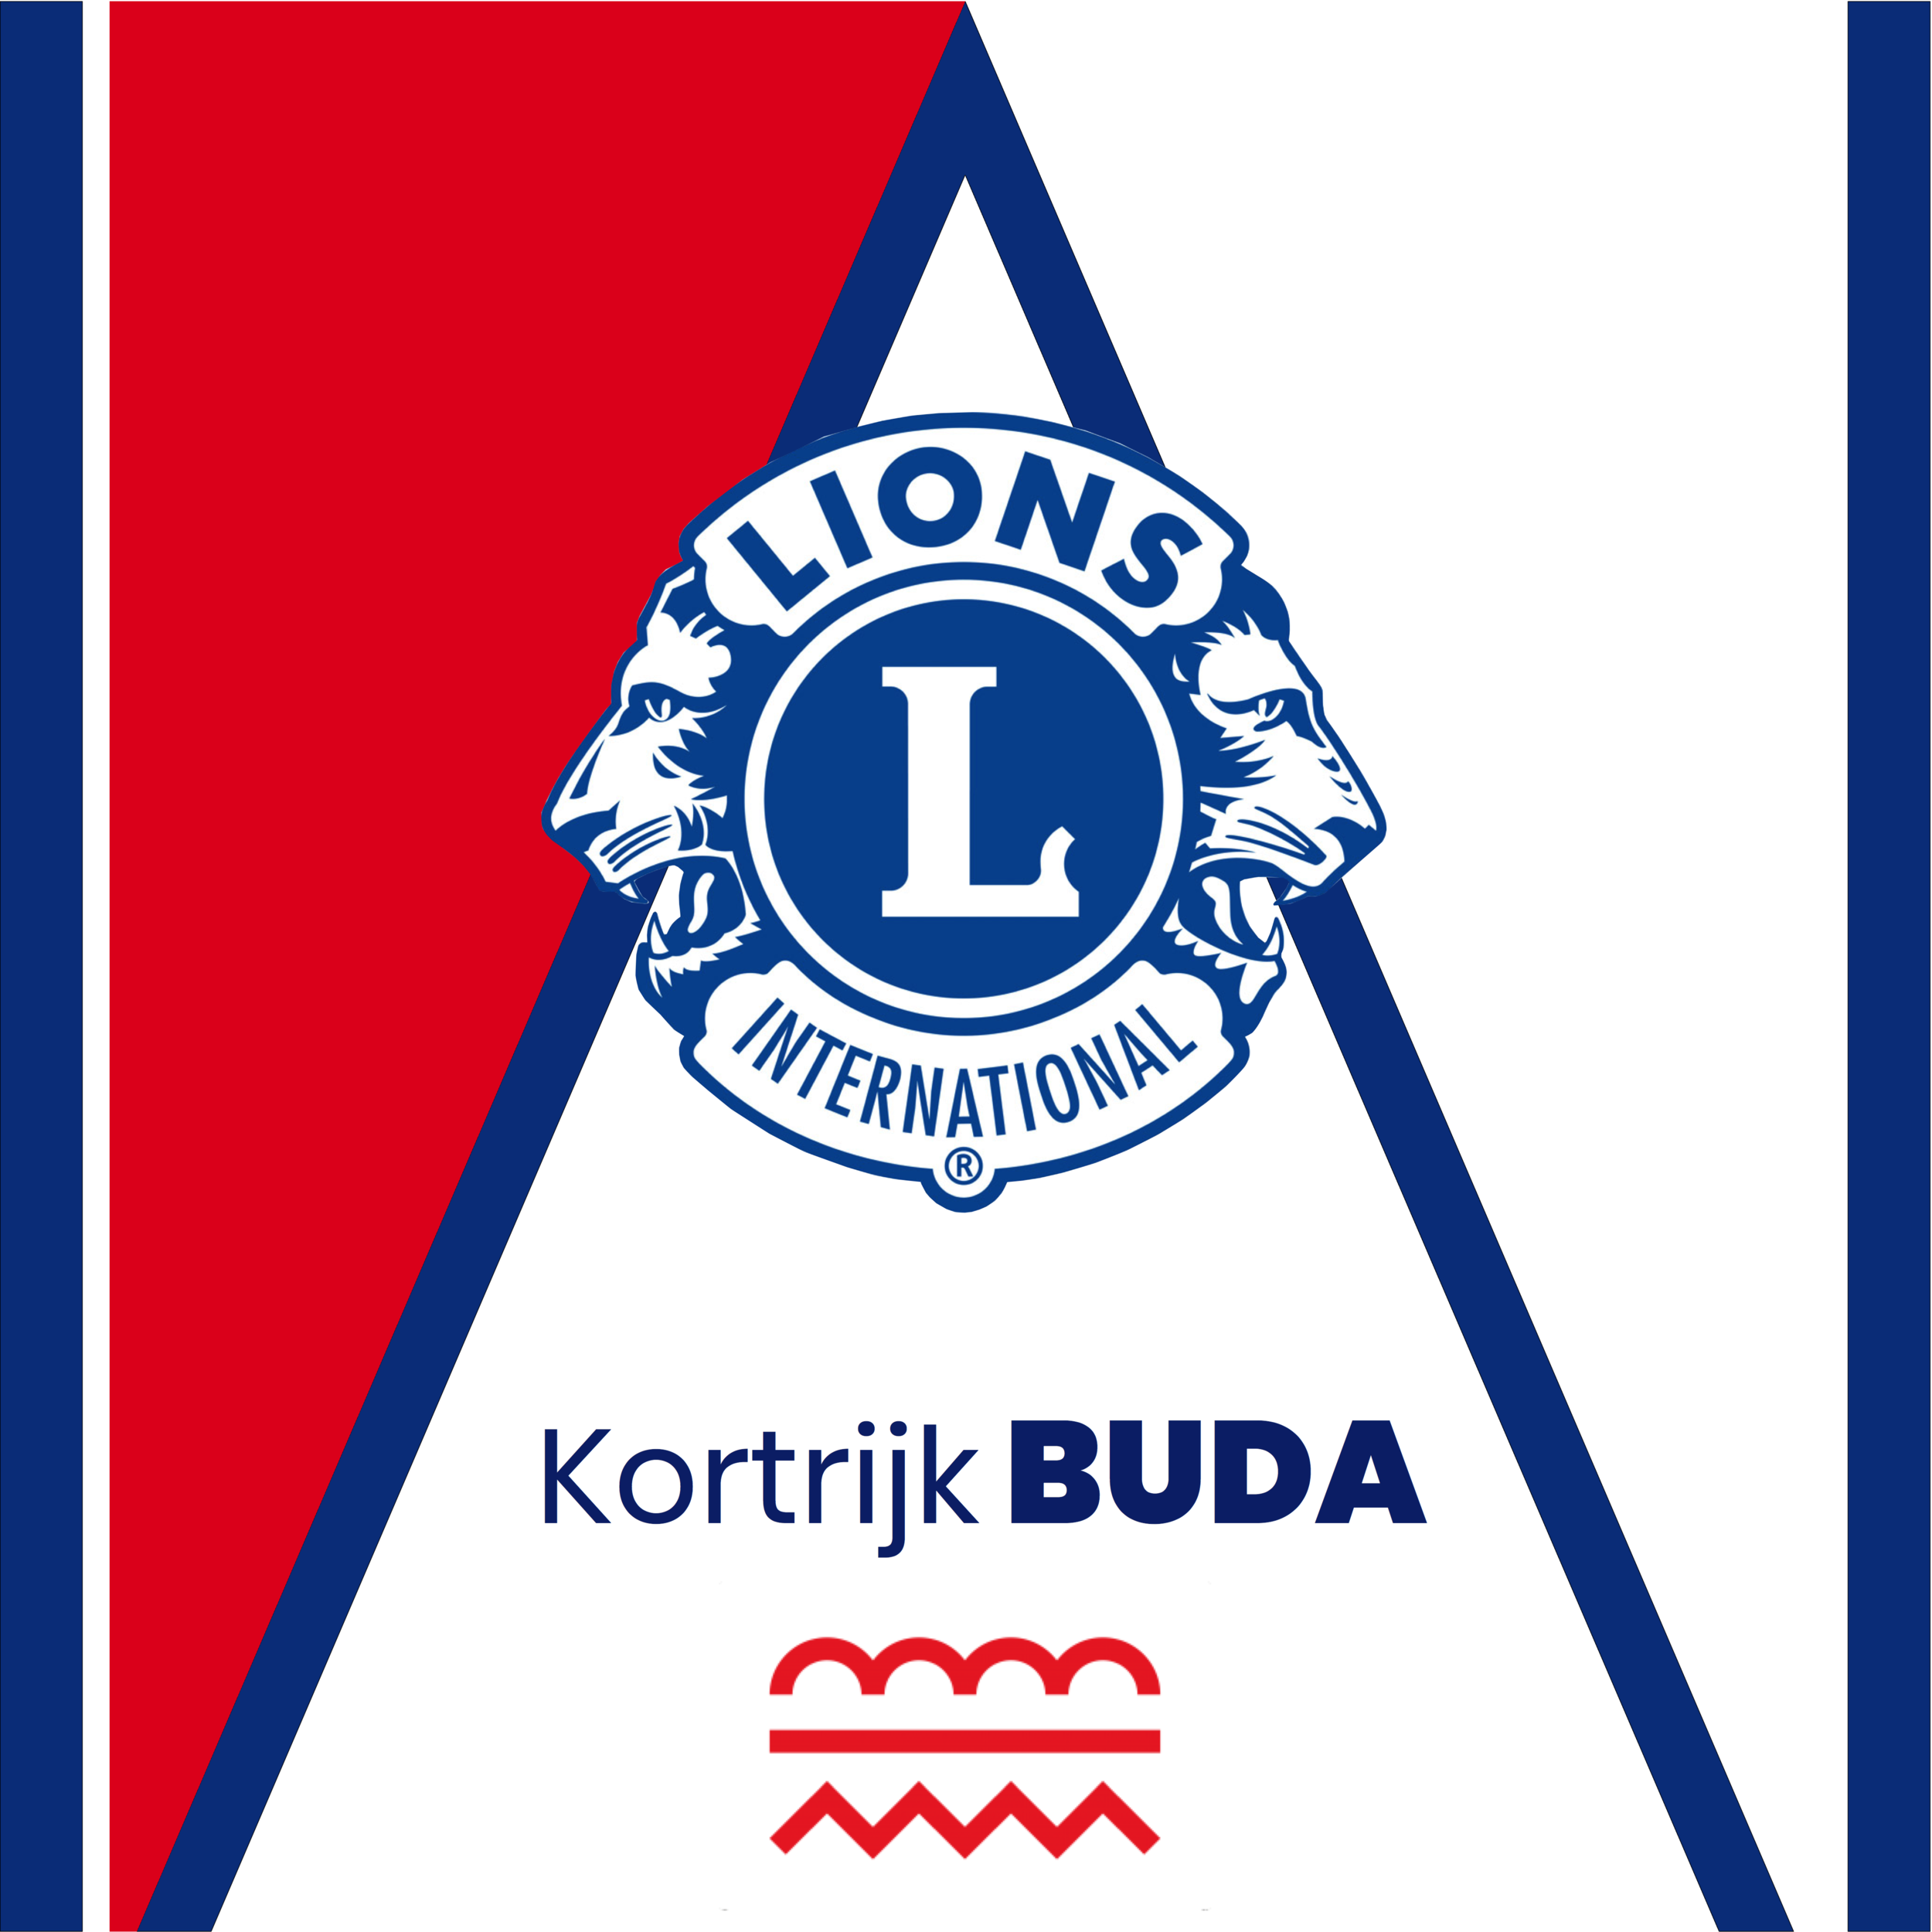 Lions Club Kortrijk Buda